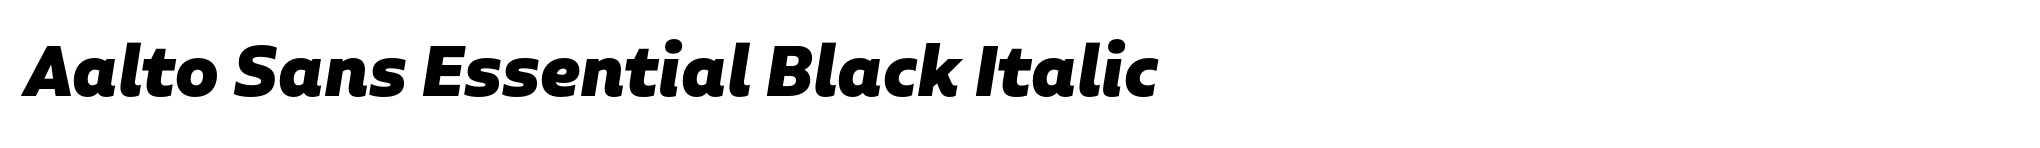 Aalto Sans Essential Black Italic image